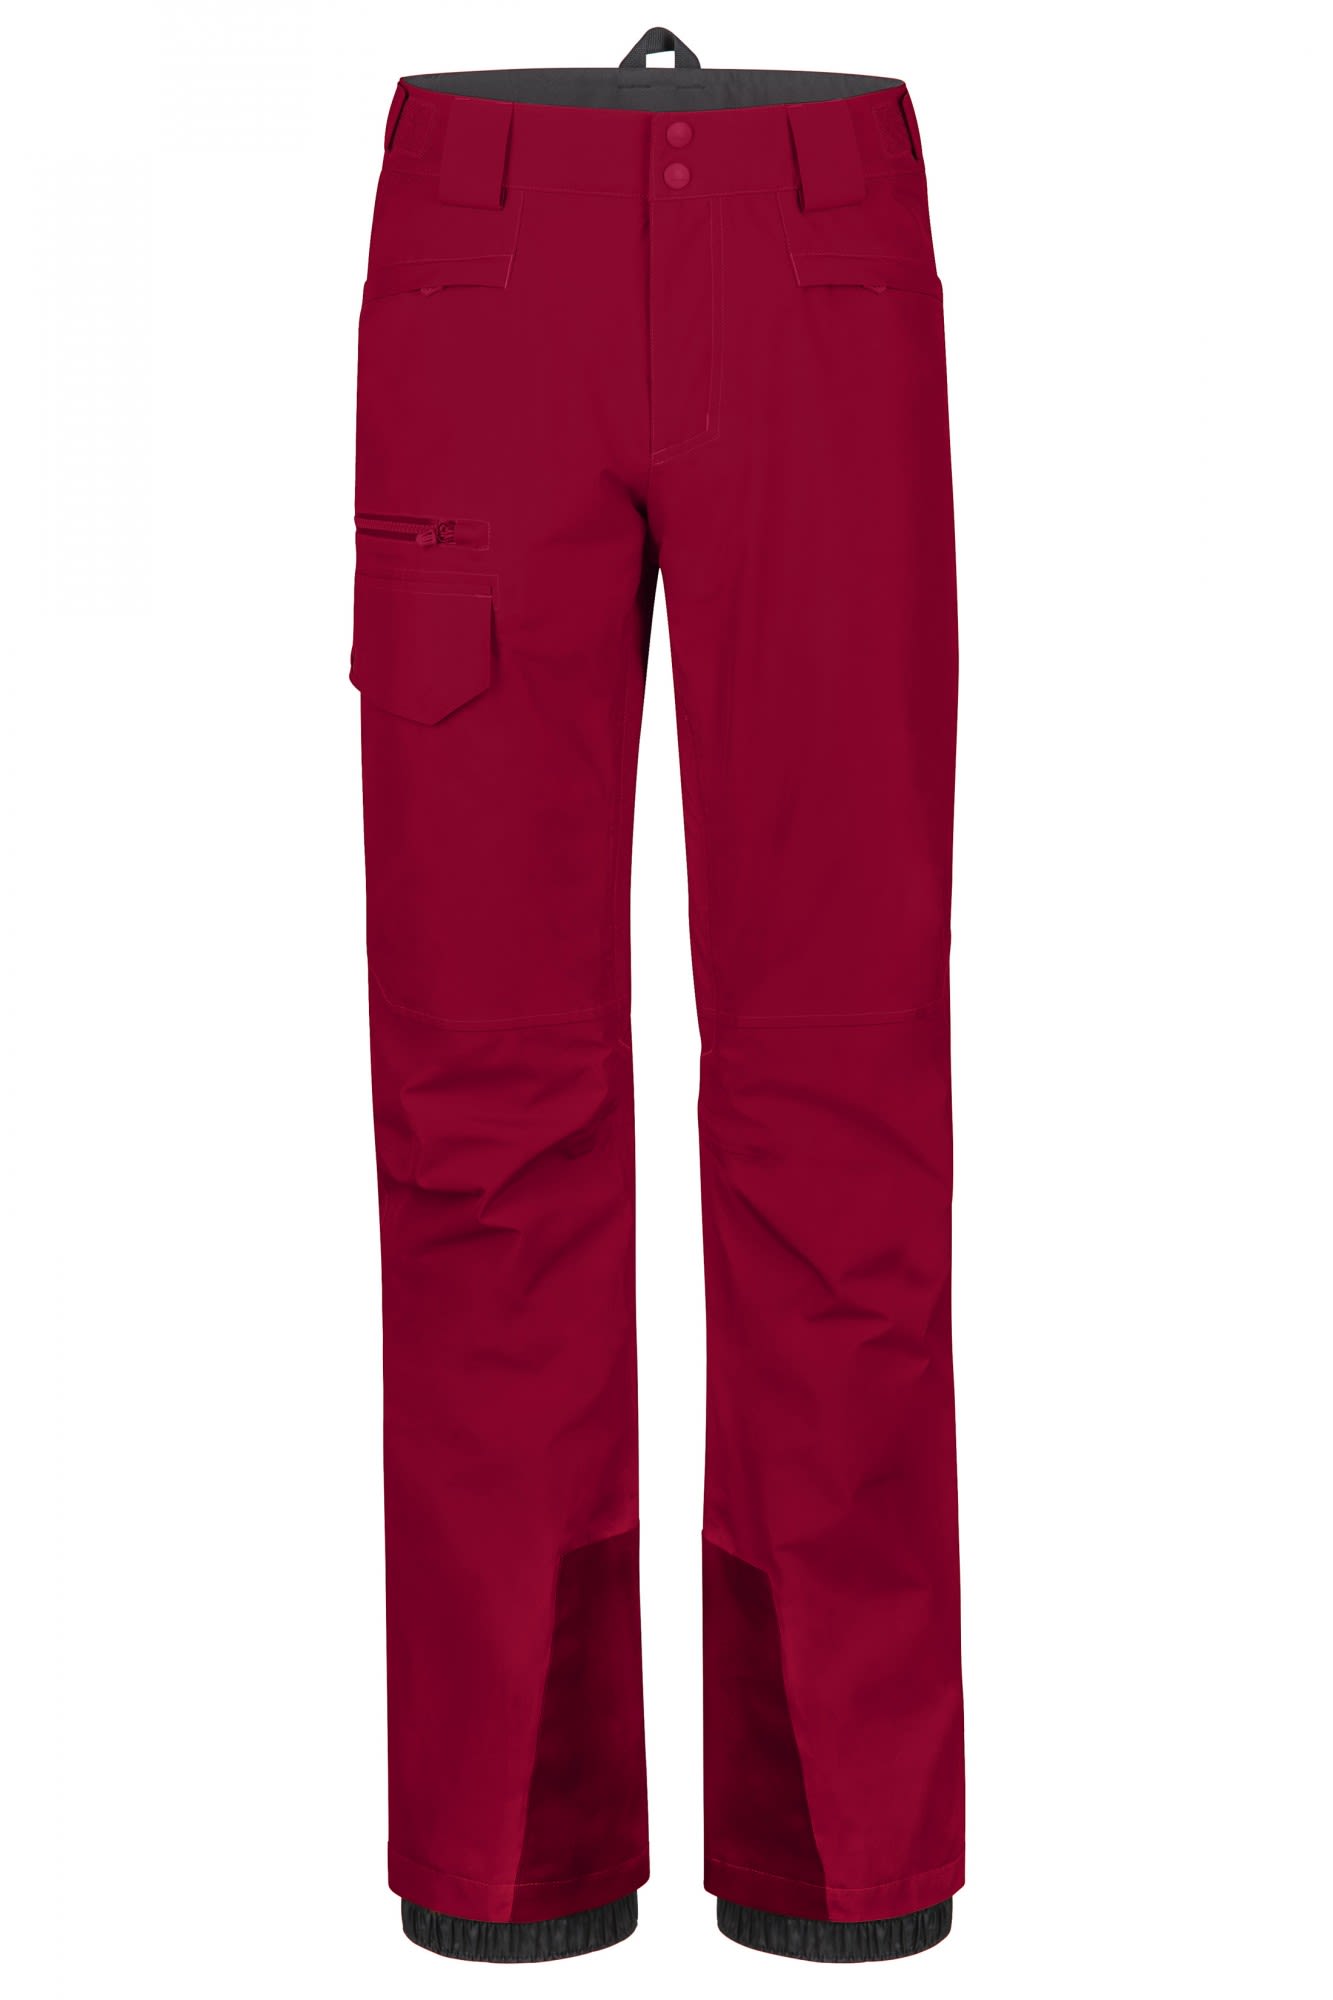 Marmot Carson Pant Rot- Male Gore-Tex(R) Lange Hosen- Grsse XL - Farbe Brick